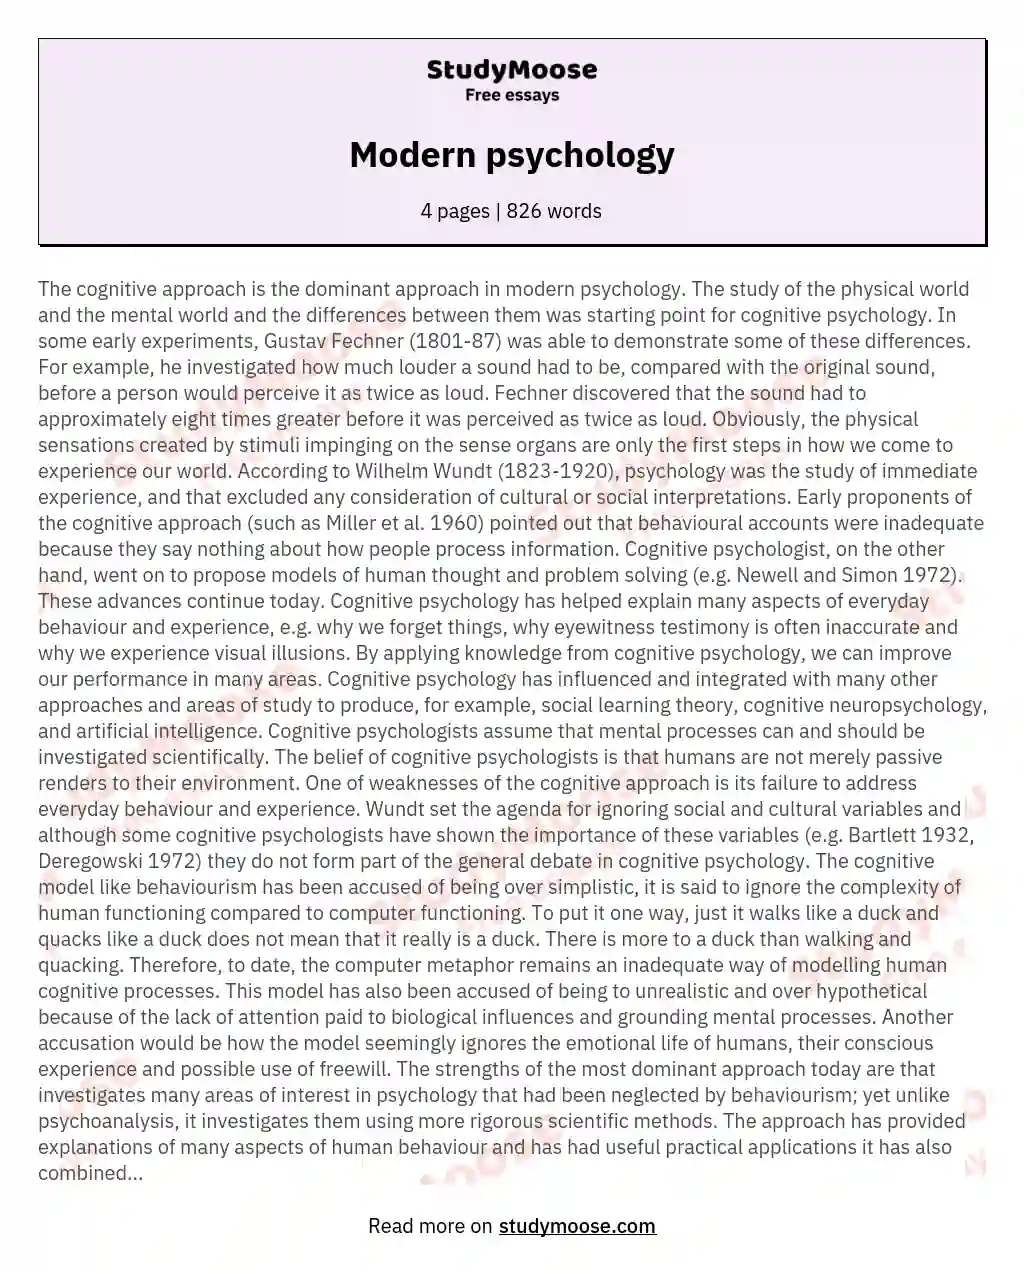 Modern psychology essay